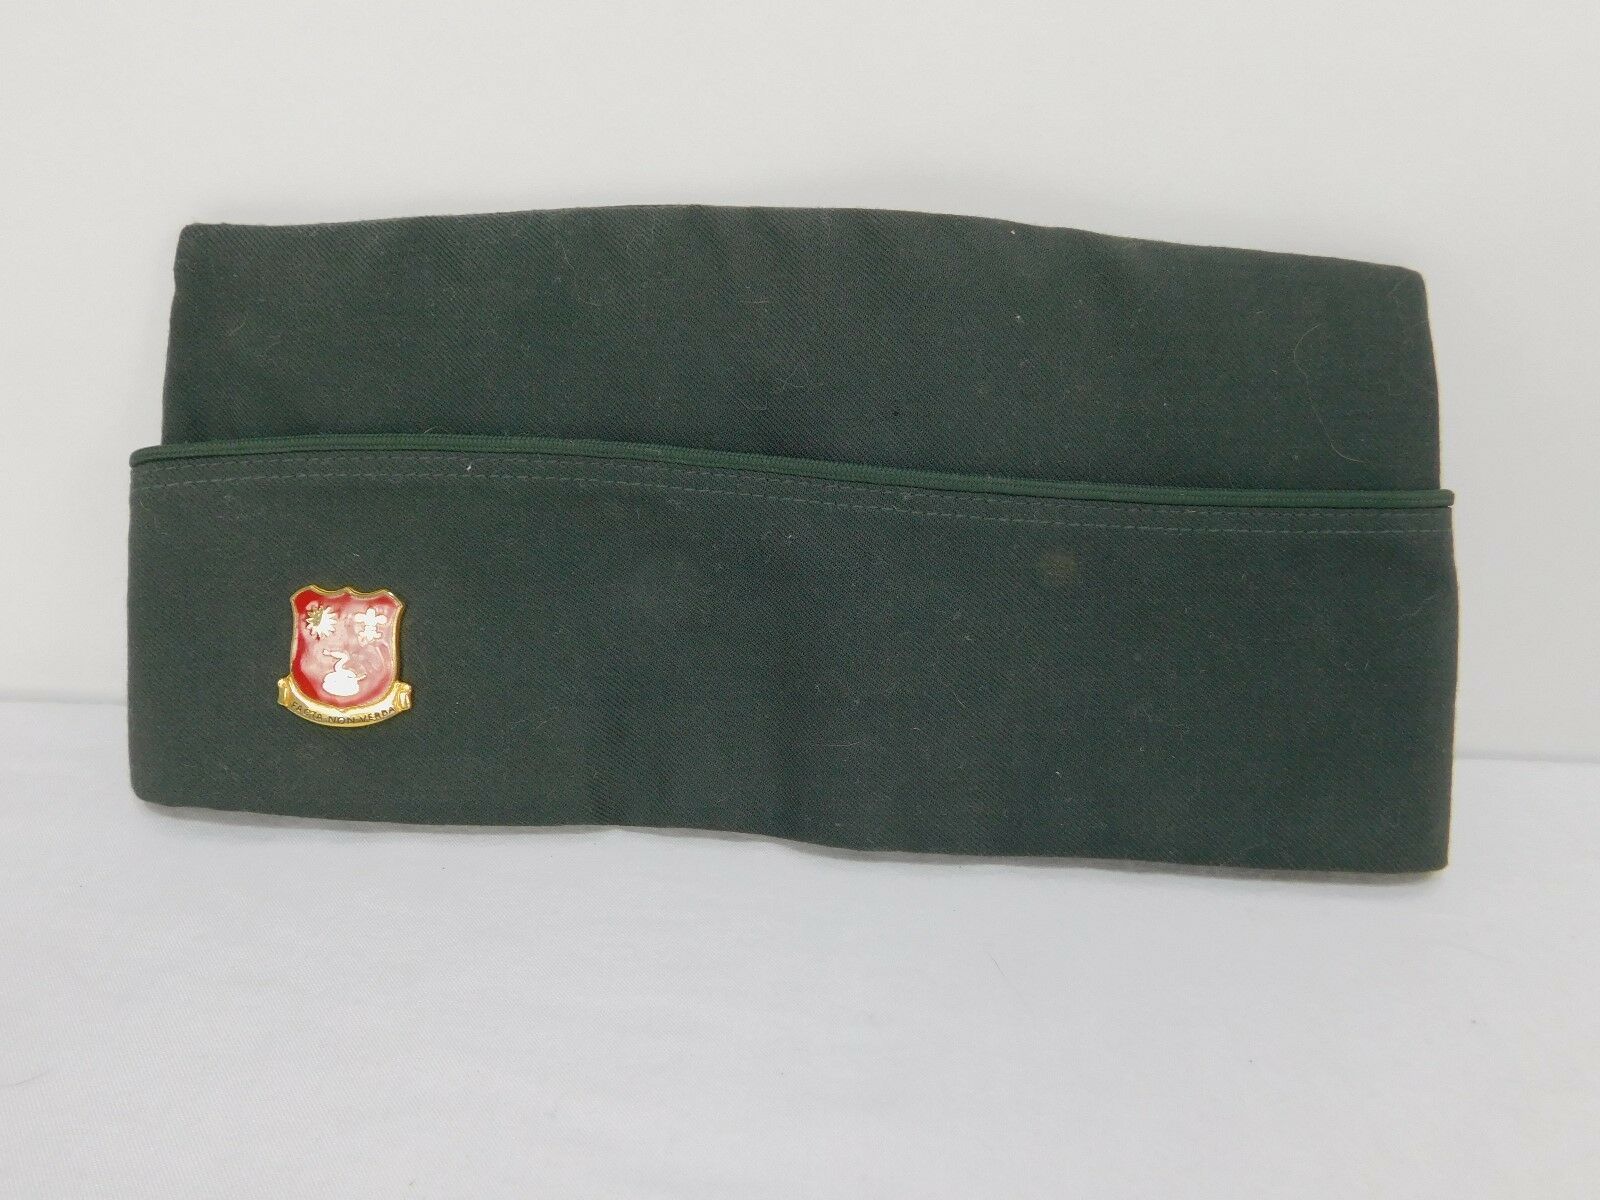 Primary image for US Army 143rd Field Artillery Regiment Unit Crest (Facta Non Verba) Garrison Hat